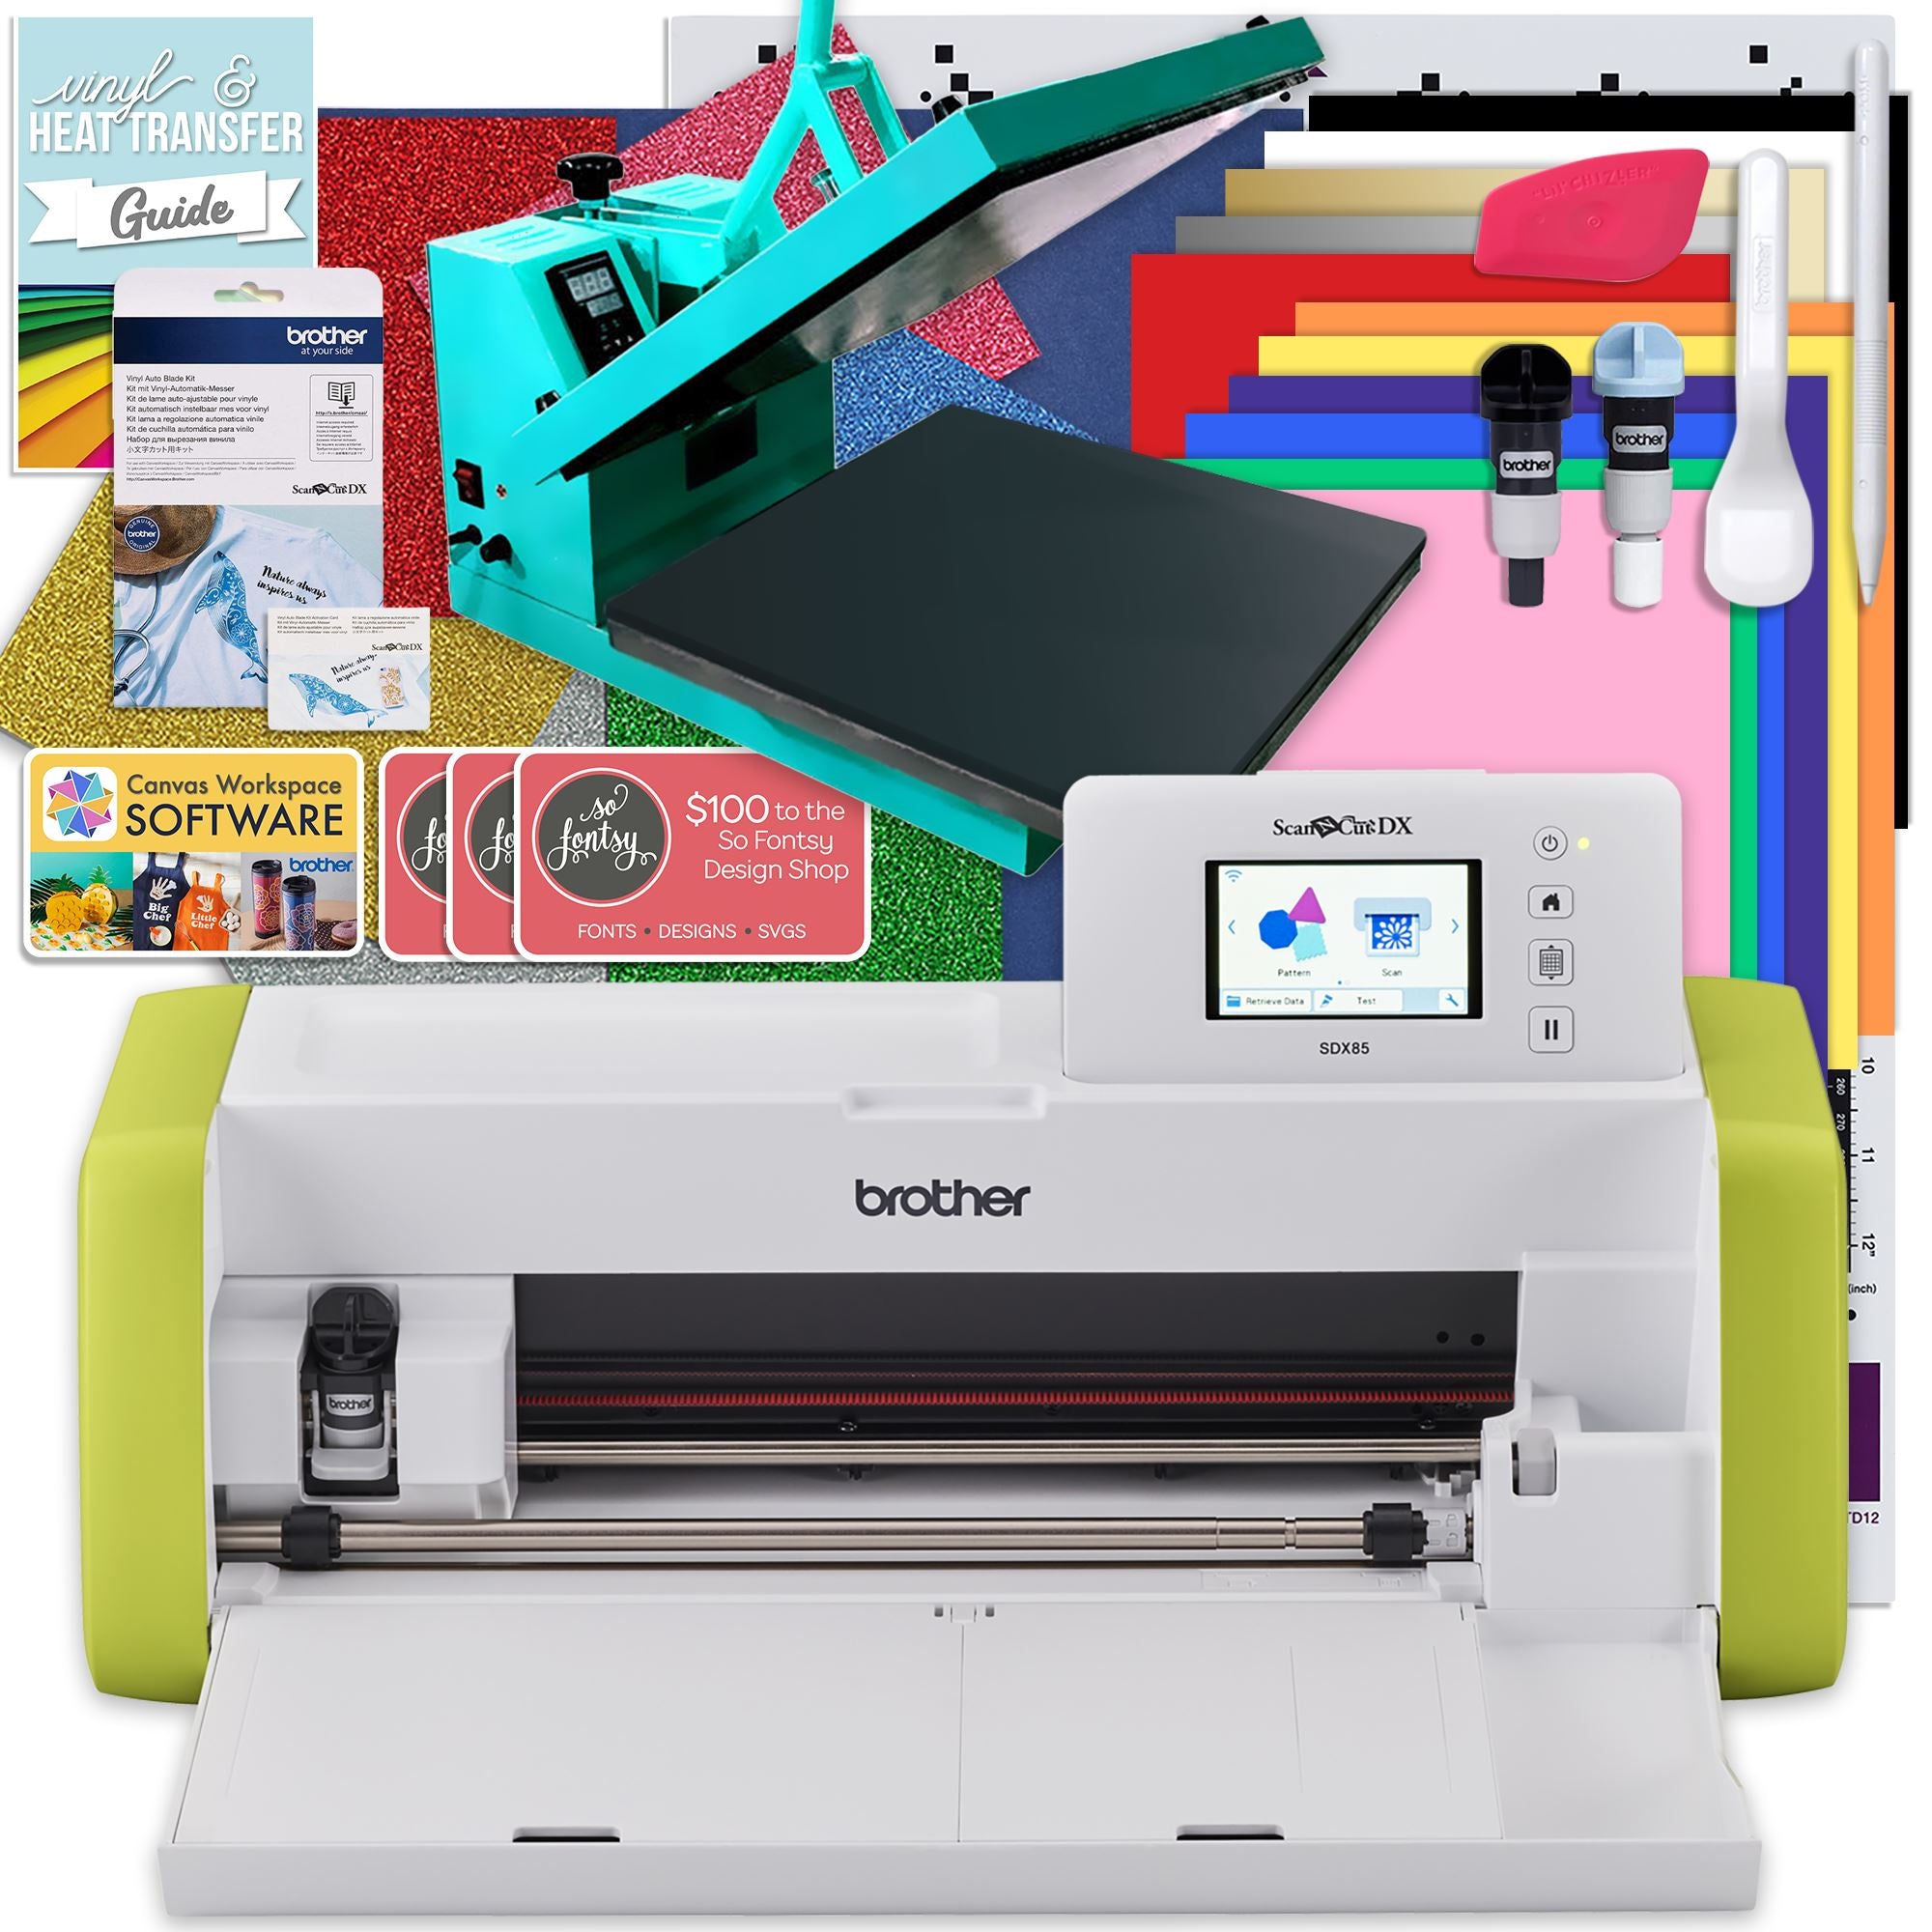 Heat press,Cutter plotter ,Printer,Ink ,Paper T-shirt Transfer Start-up Kit